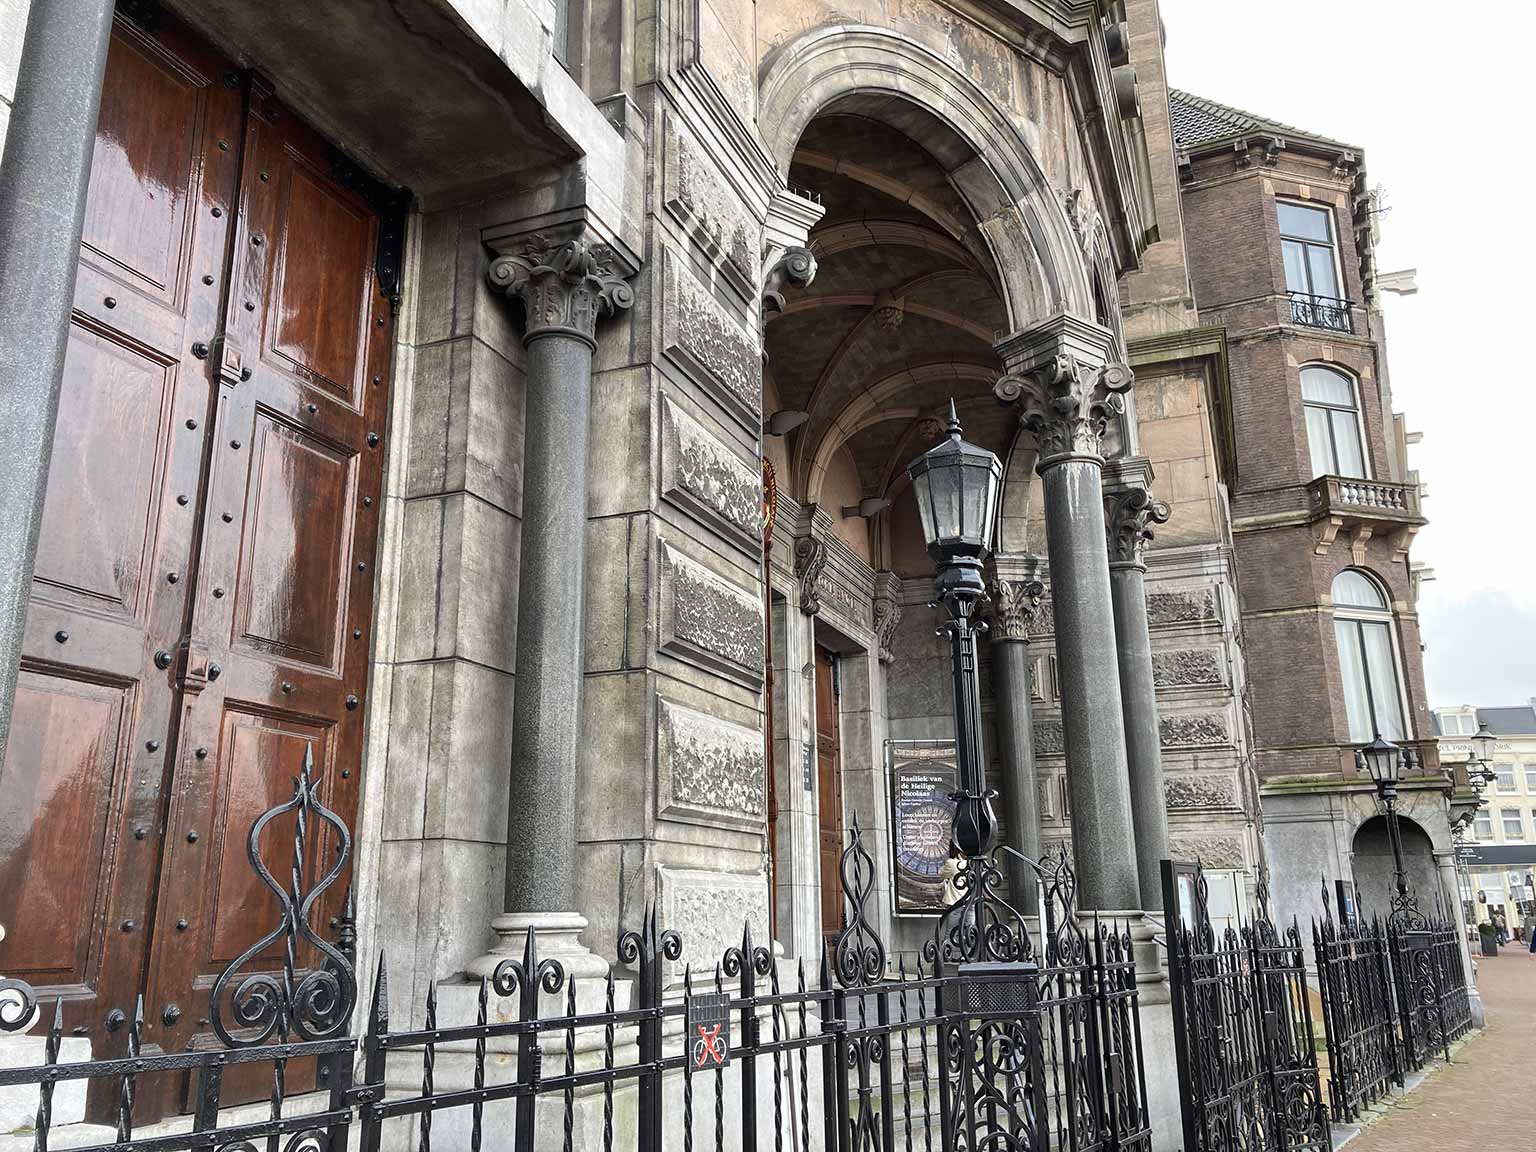 Entrance of the Saint Nicholas Church, Amsterdam, on Prins Hendrikkade